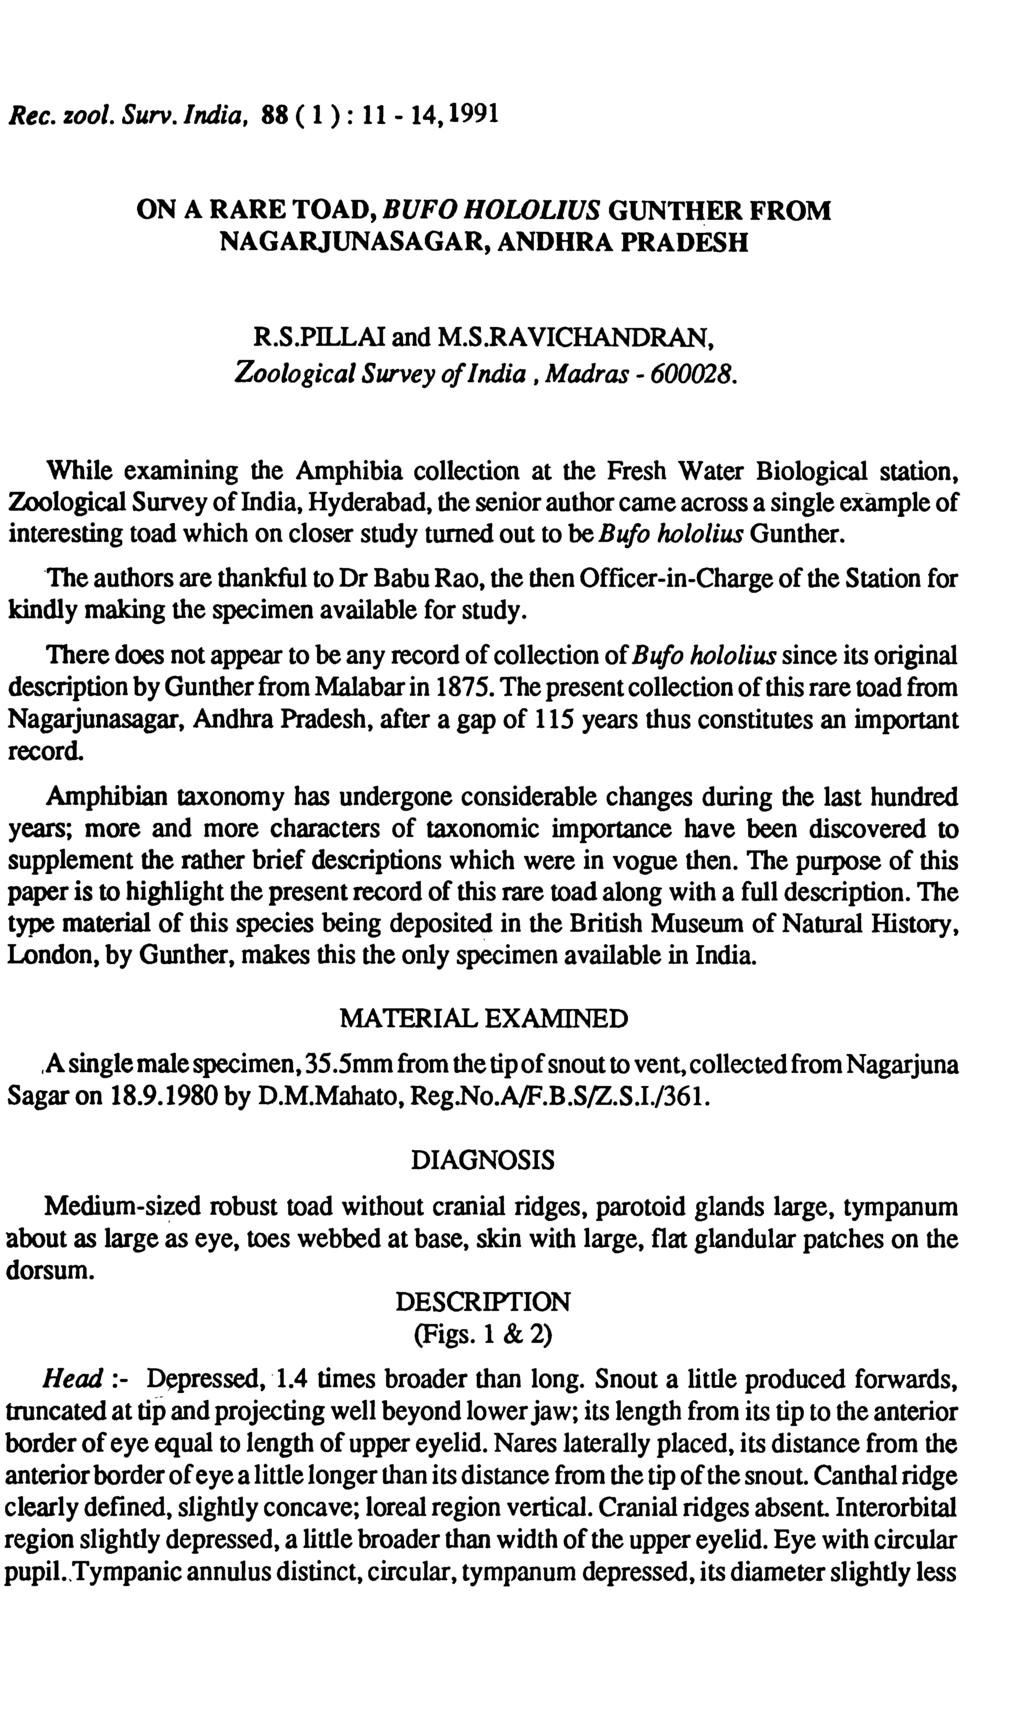 Rec. %001. Surv.lndia, 88 ( 1 ) : 11-14,1991 ON A RARE TOAD, BUFO HOLOLIUS GUNTH;ER FROM NAGARJUNASAGAR,ANDHRAPRADESH R.S.PILLA! and M.S.RA VICHANDRAN, Zoological SJUlIey of India, Madras - 600028.